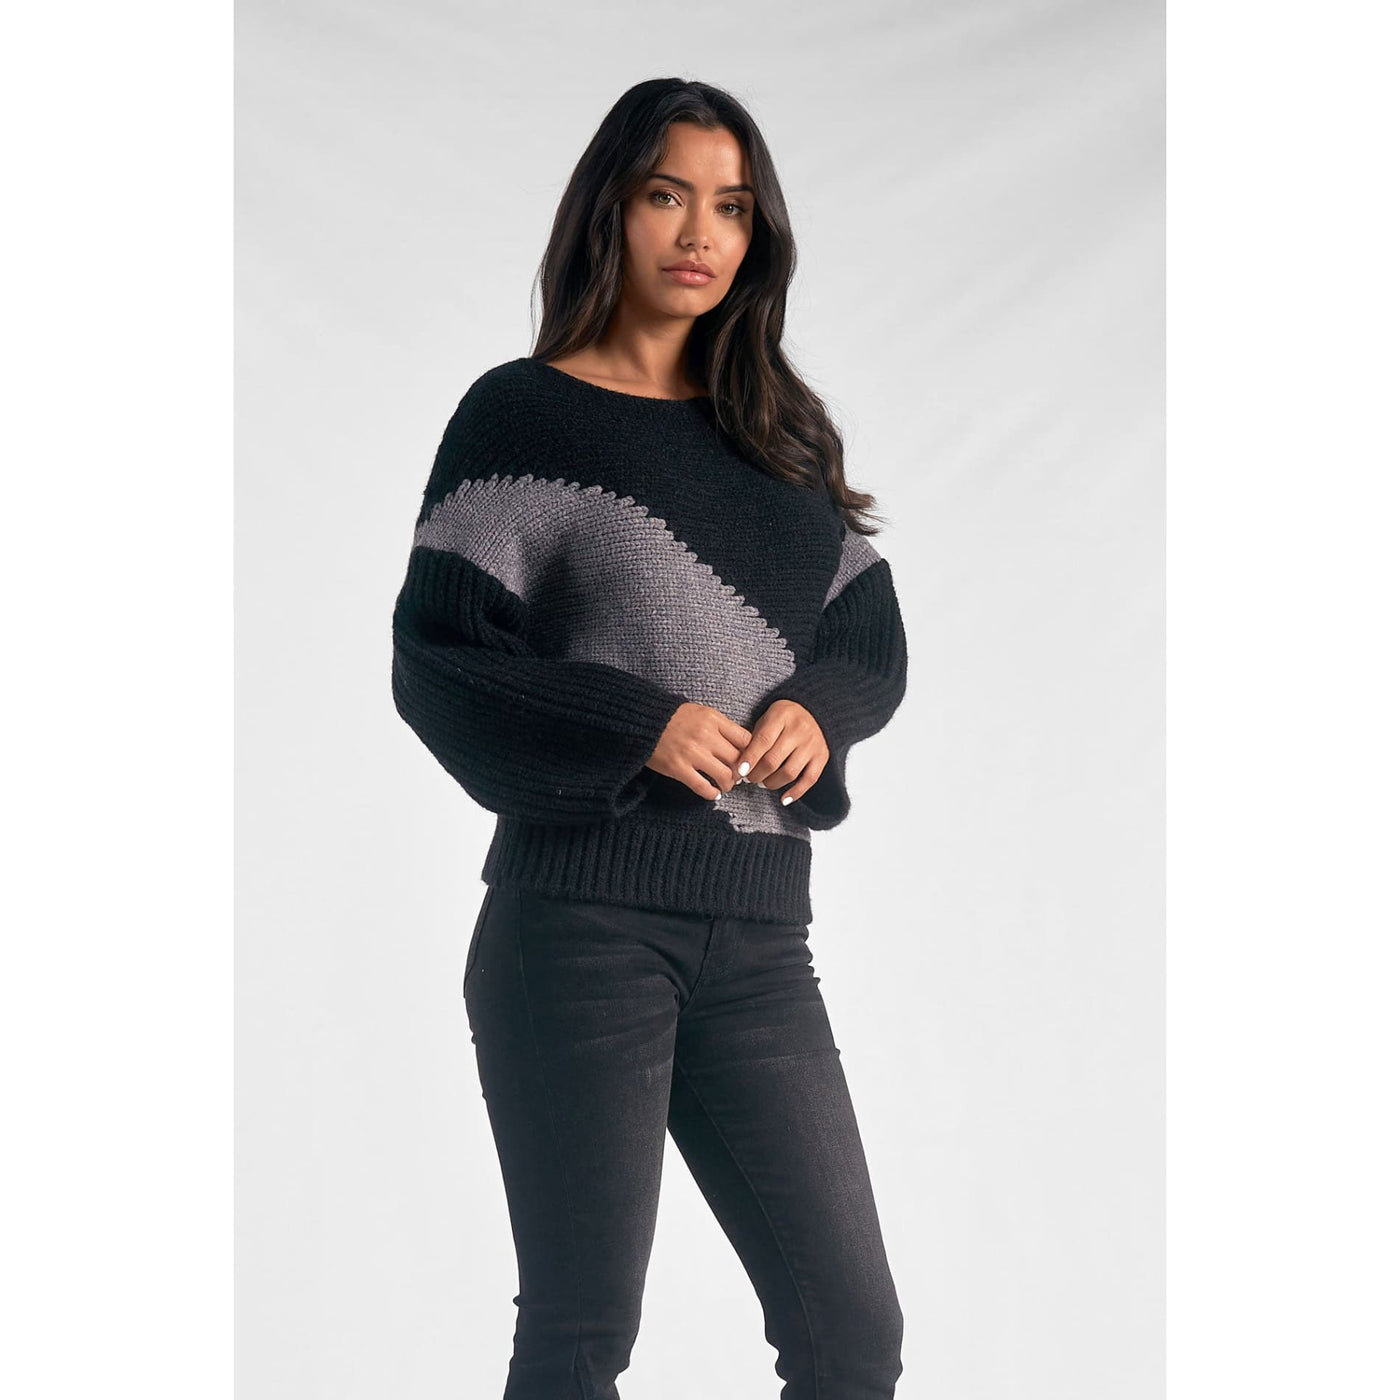 Innocent Look Sweater - 130 Sweaters/Cardigans